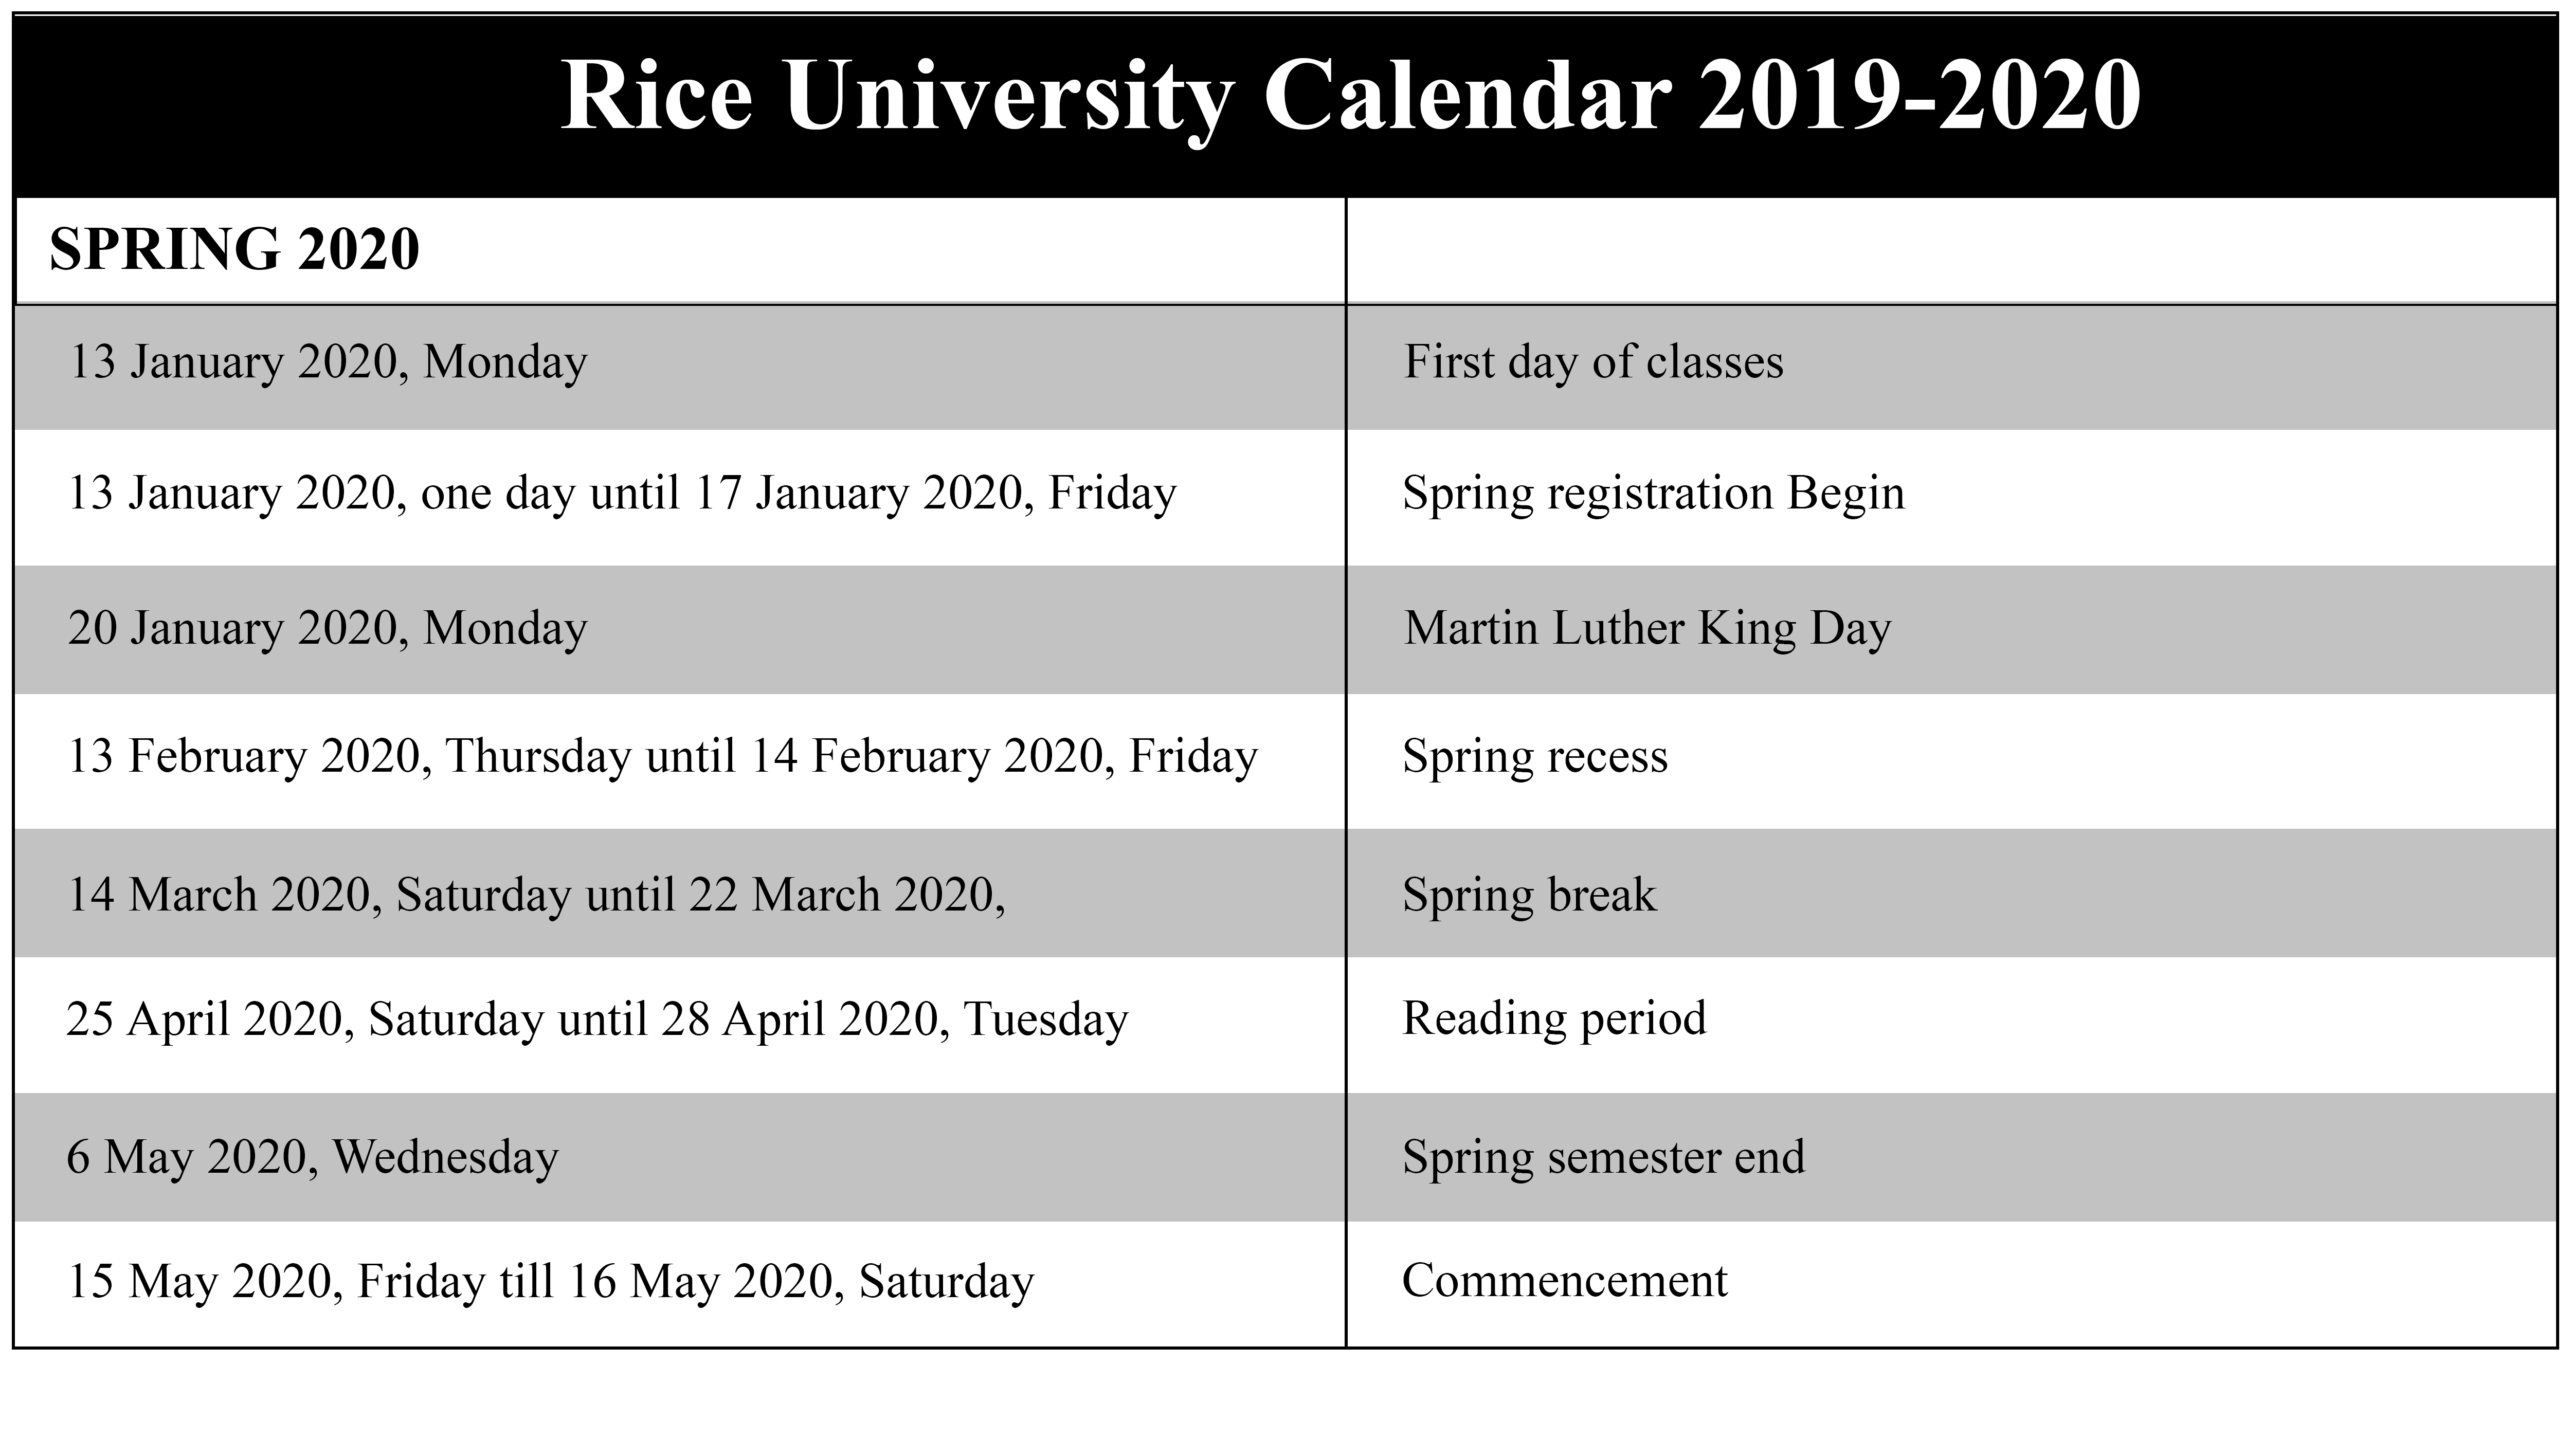 Rice University Calendar 2019 2020 (spring)